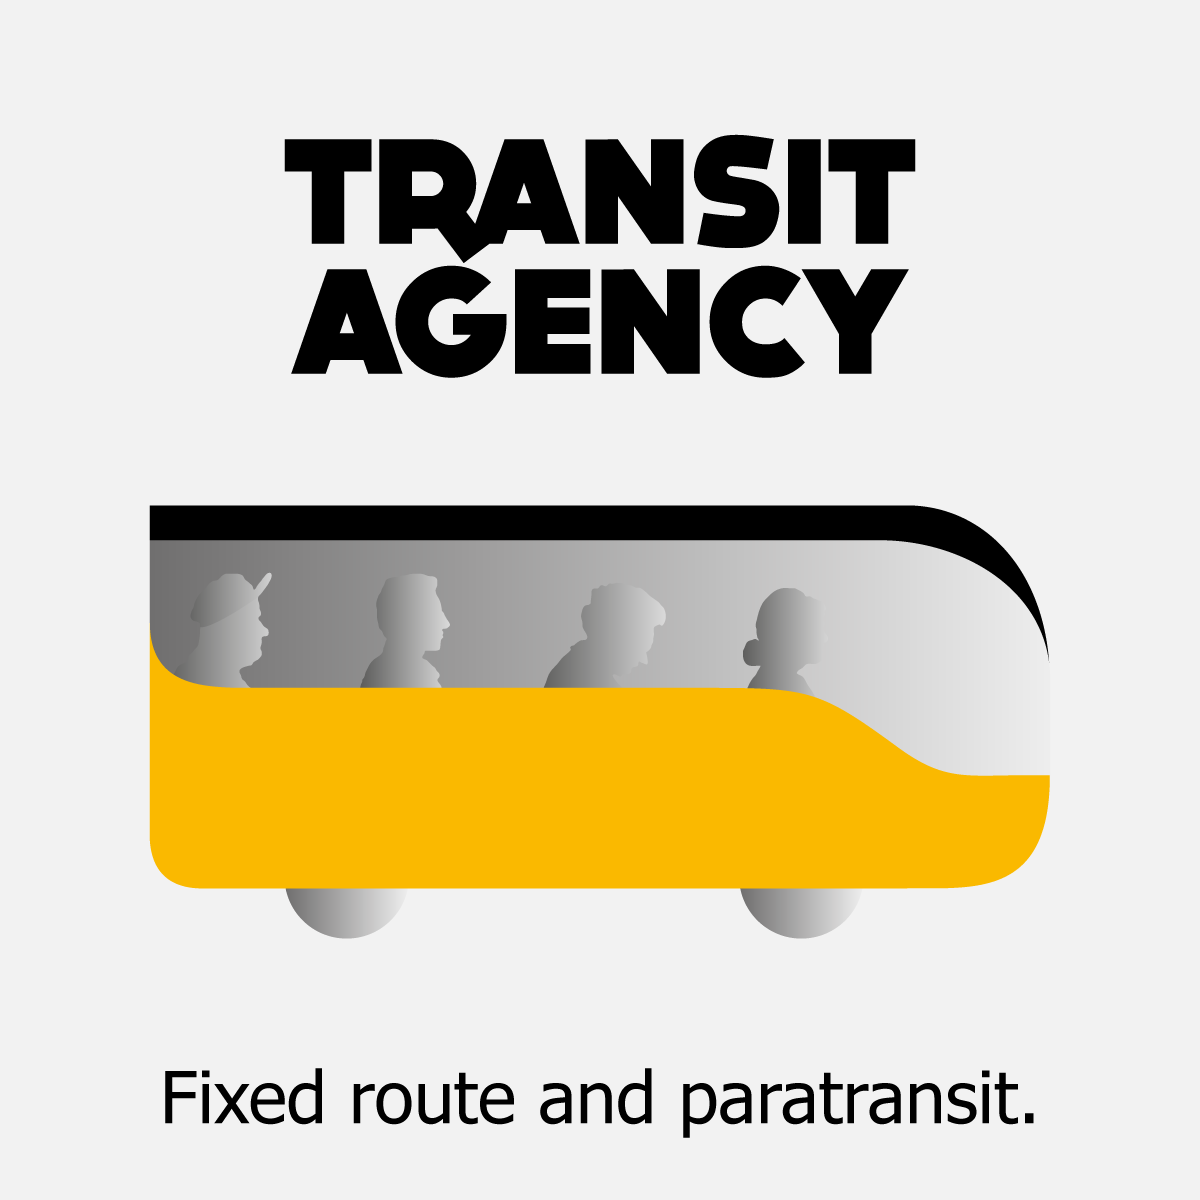 Transit agency